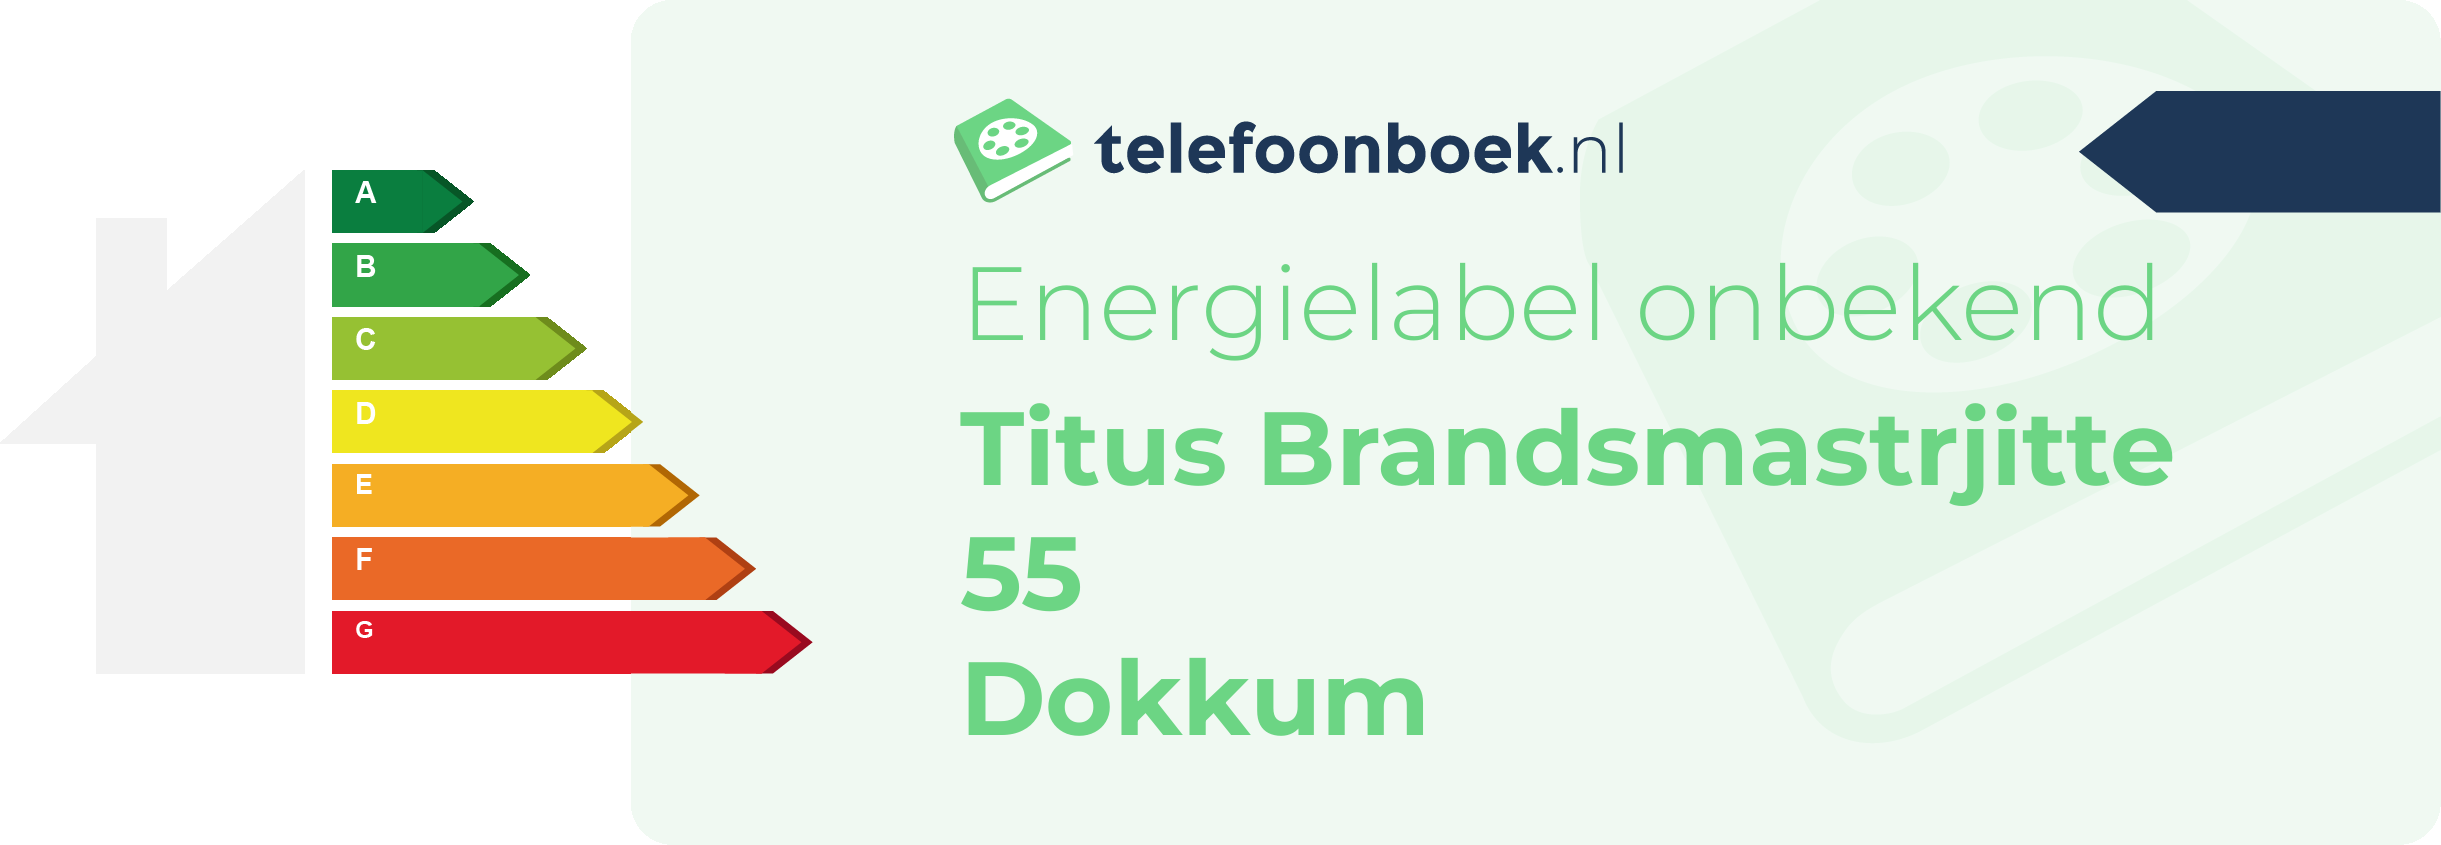 Energielabel Titus Brandsmastrjitte 55 Dokkum